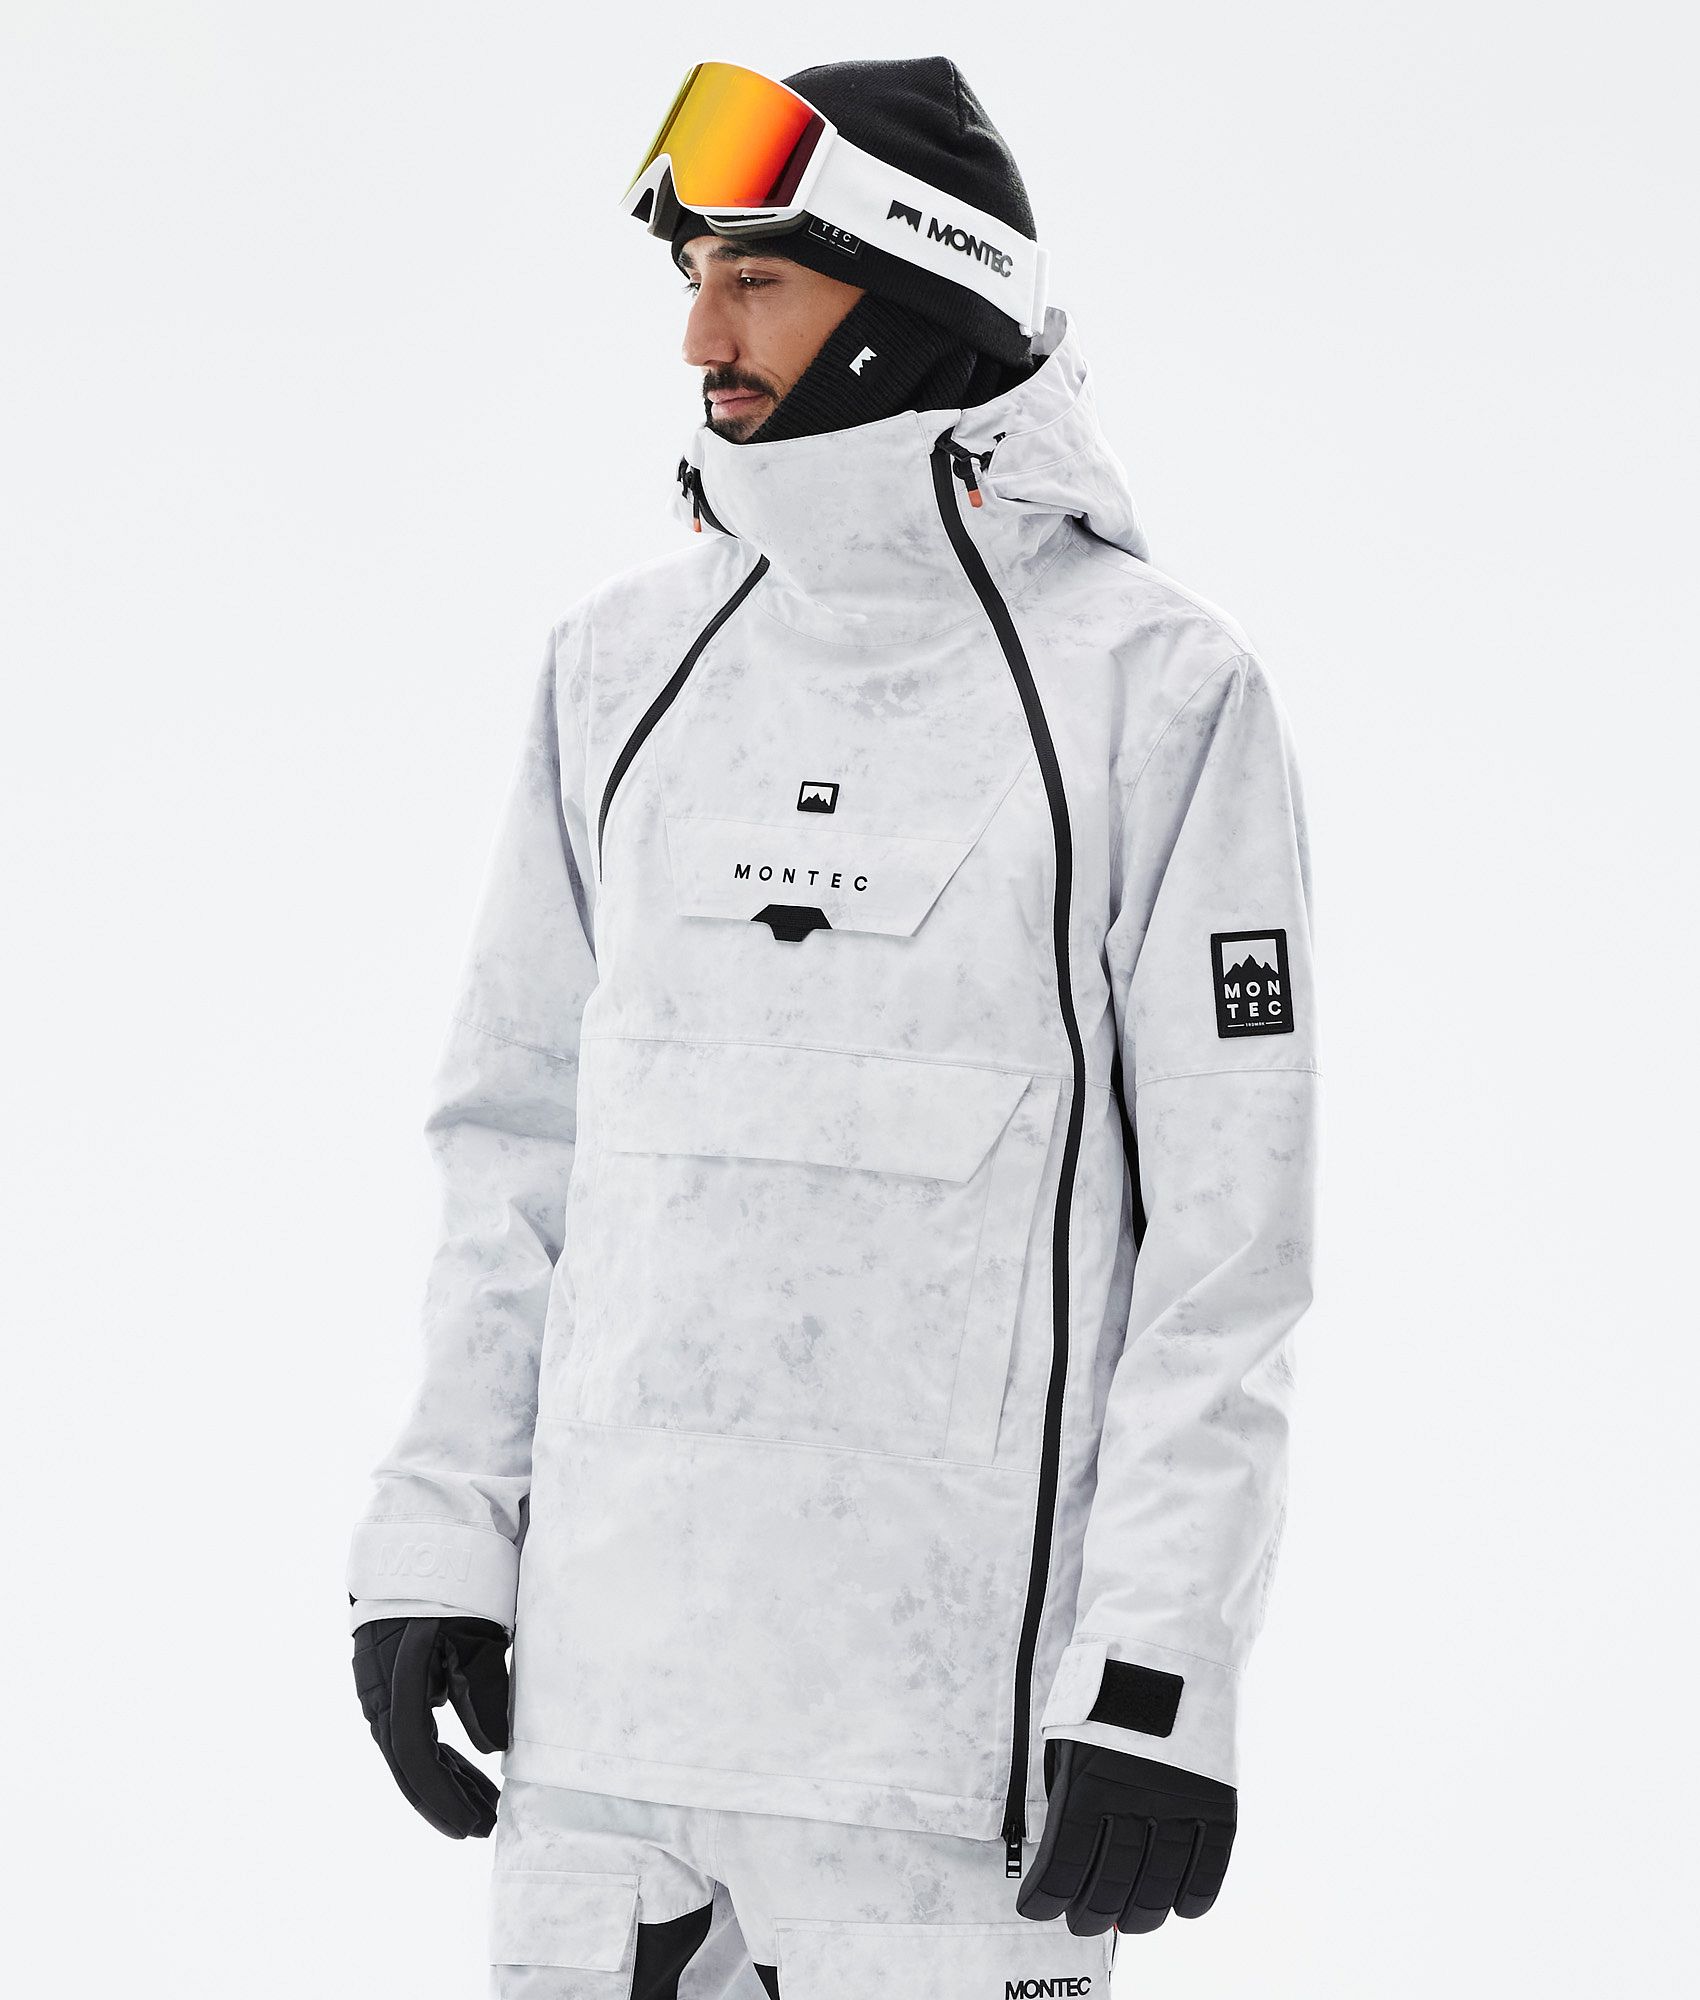 HOT! New Stylish Men's White Jacket 100% Real Lambskin  MotorcycleBikerCoatJacket | eBay